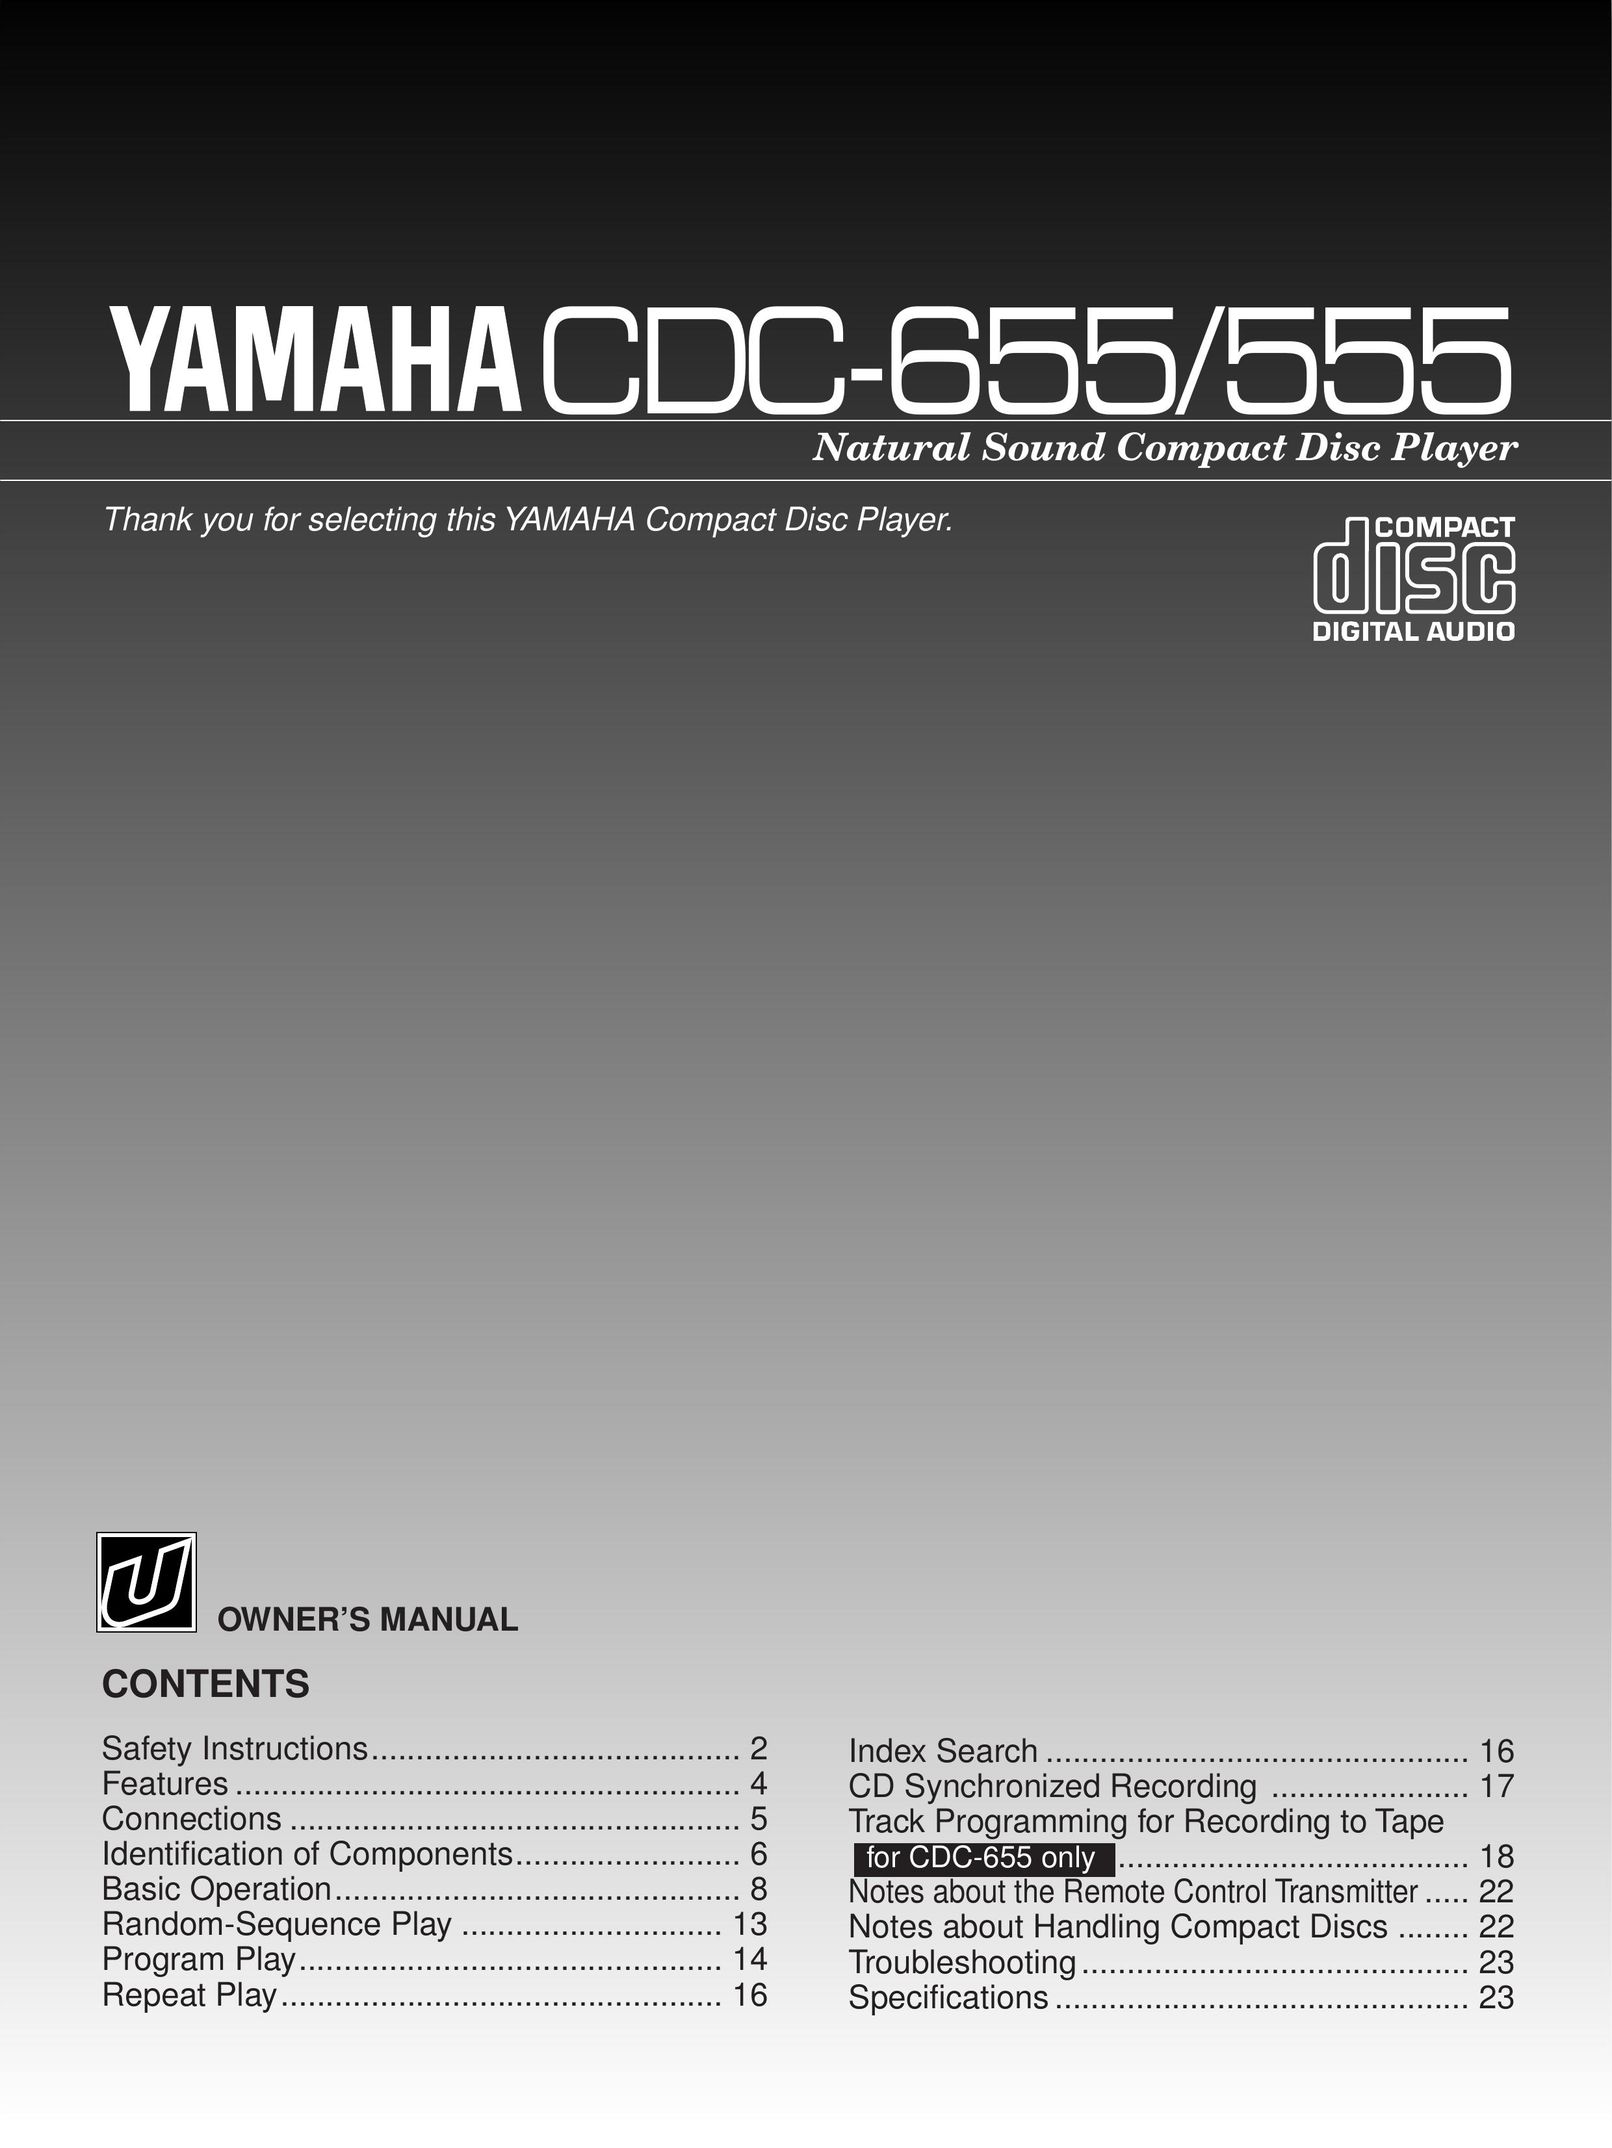 Yamaha CDC-555 Stereo System User Manual